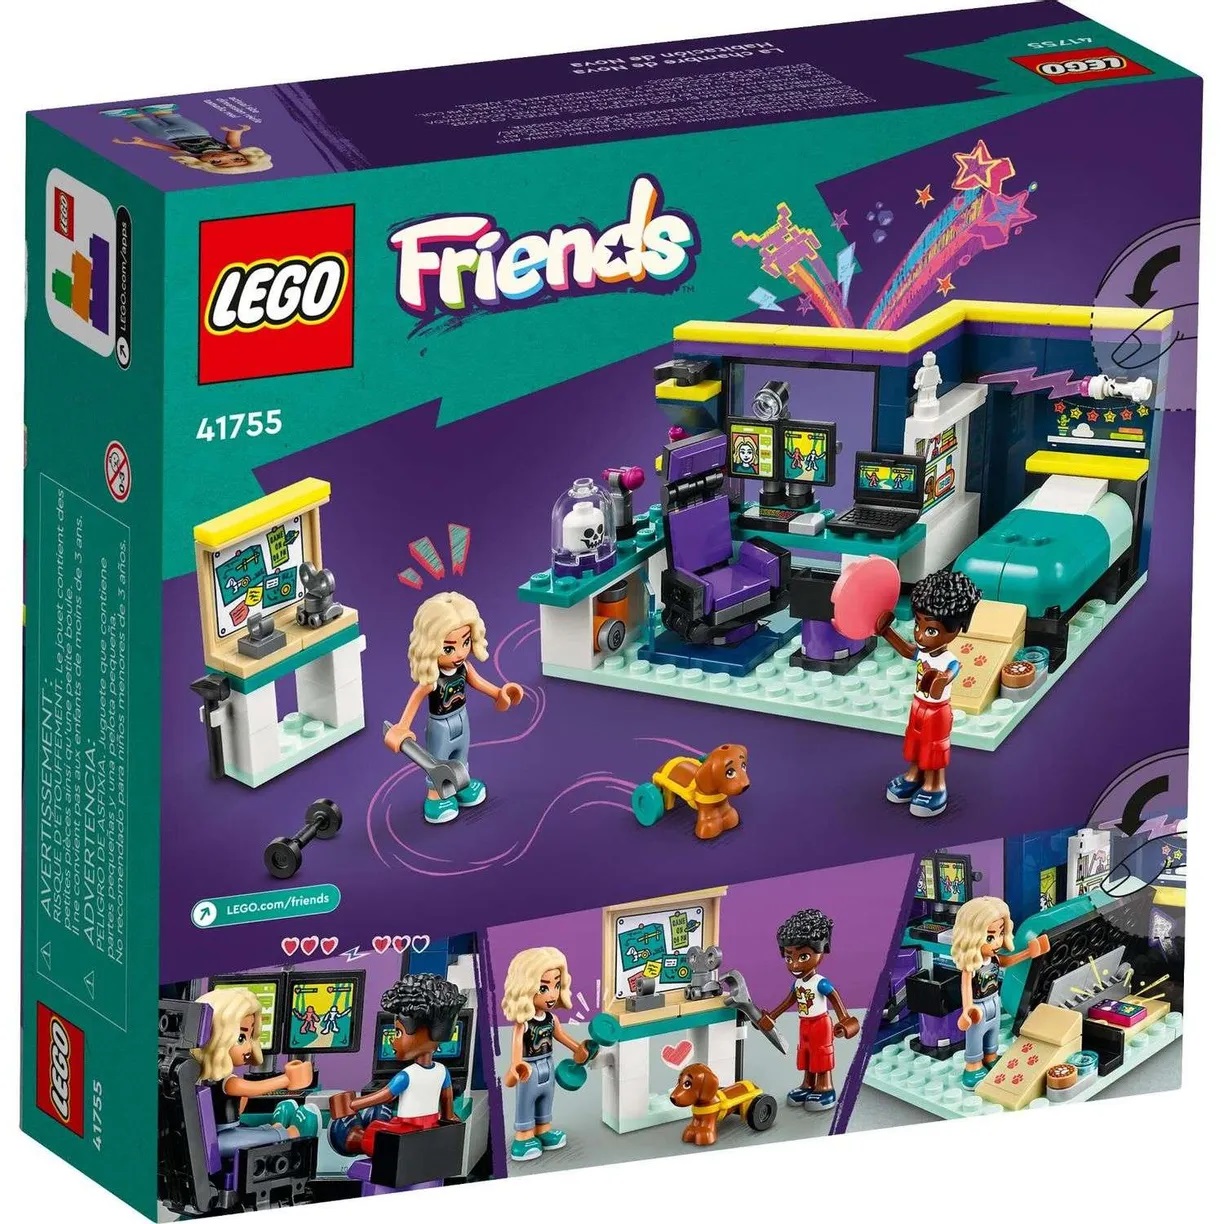 Lego Friends 41755 Комната Новы